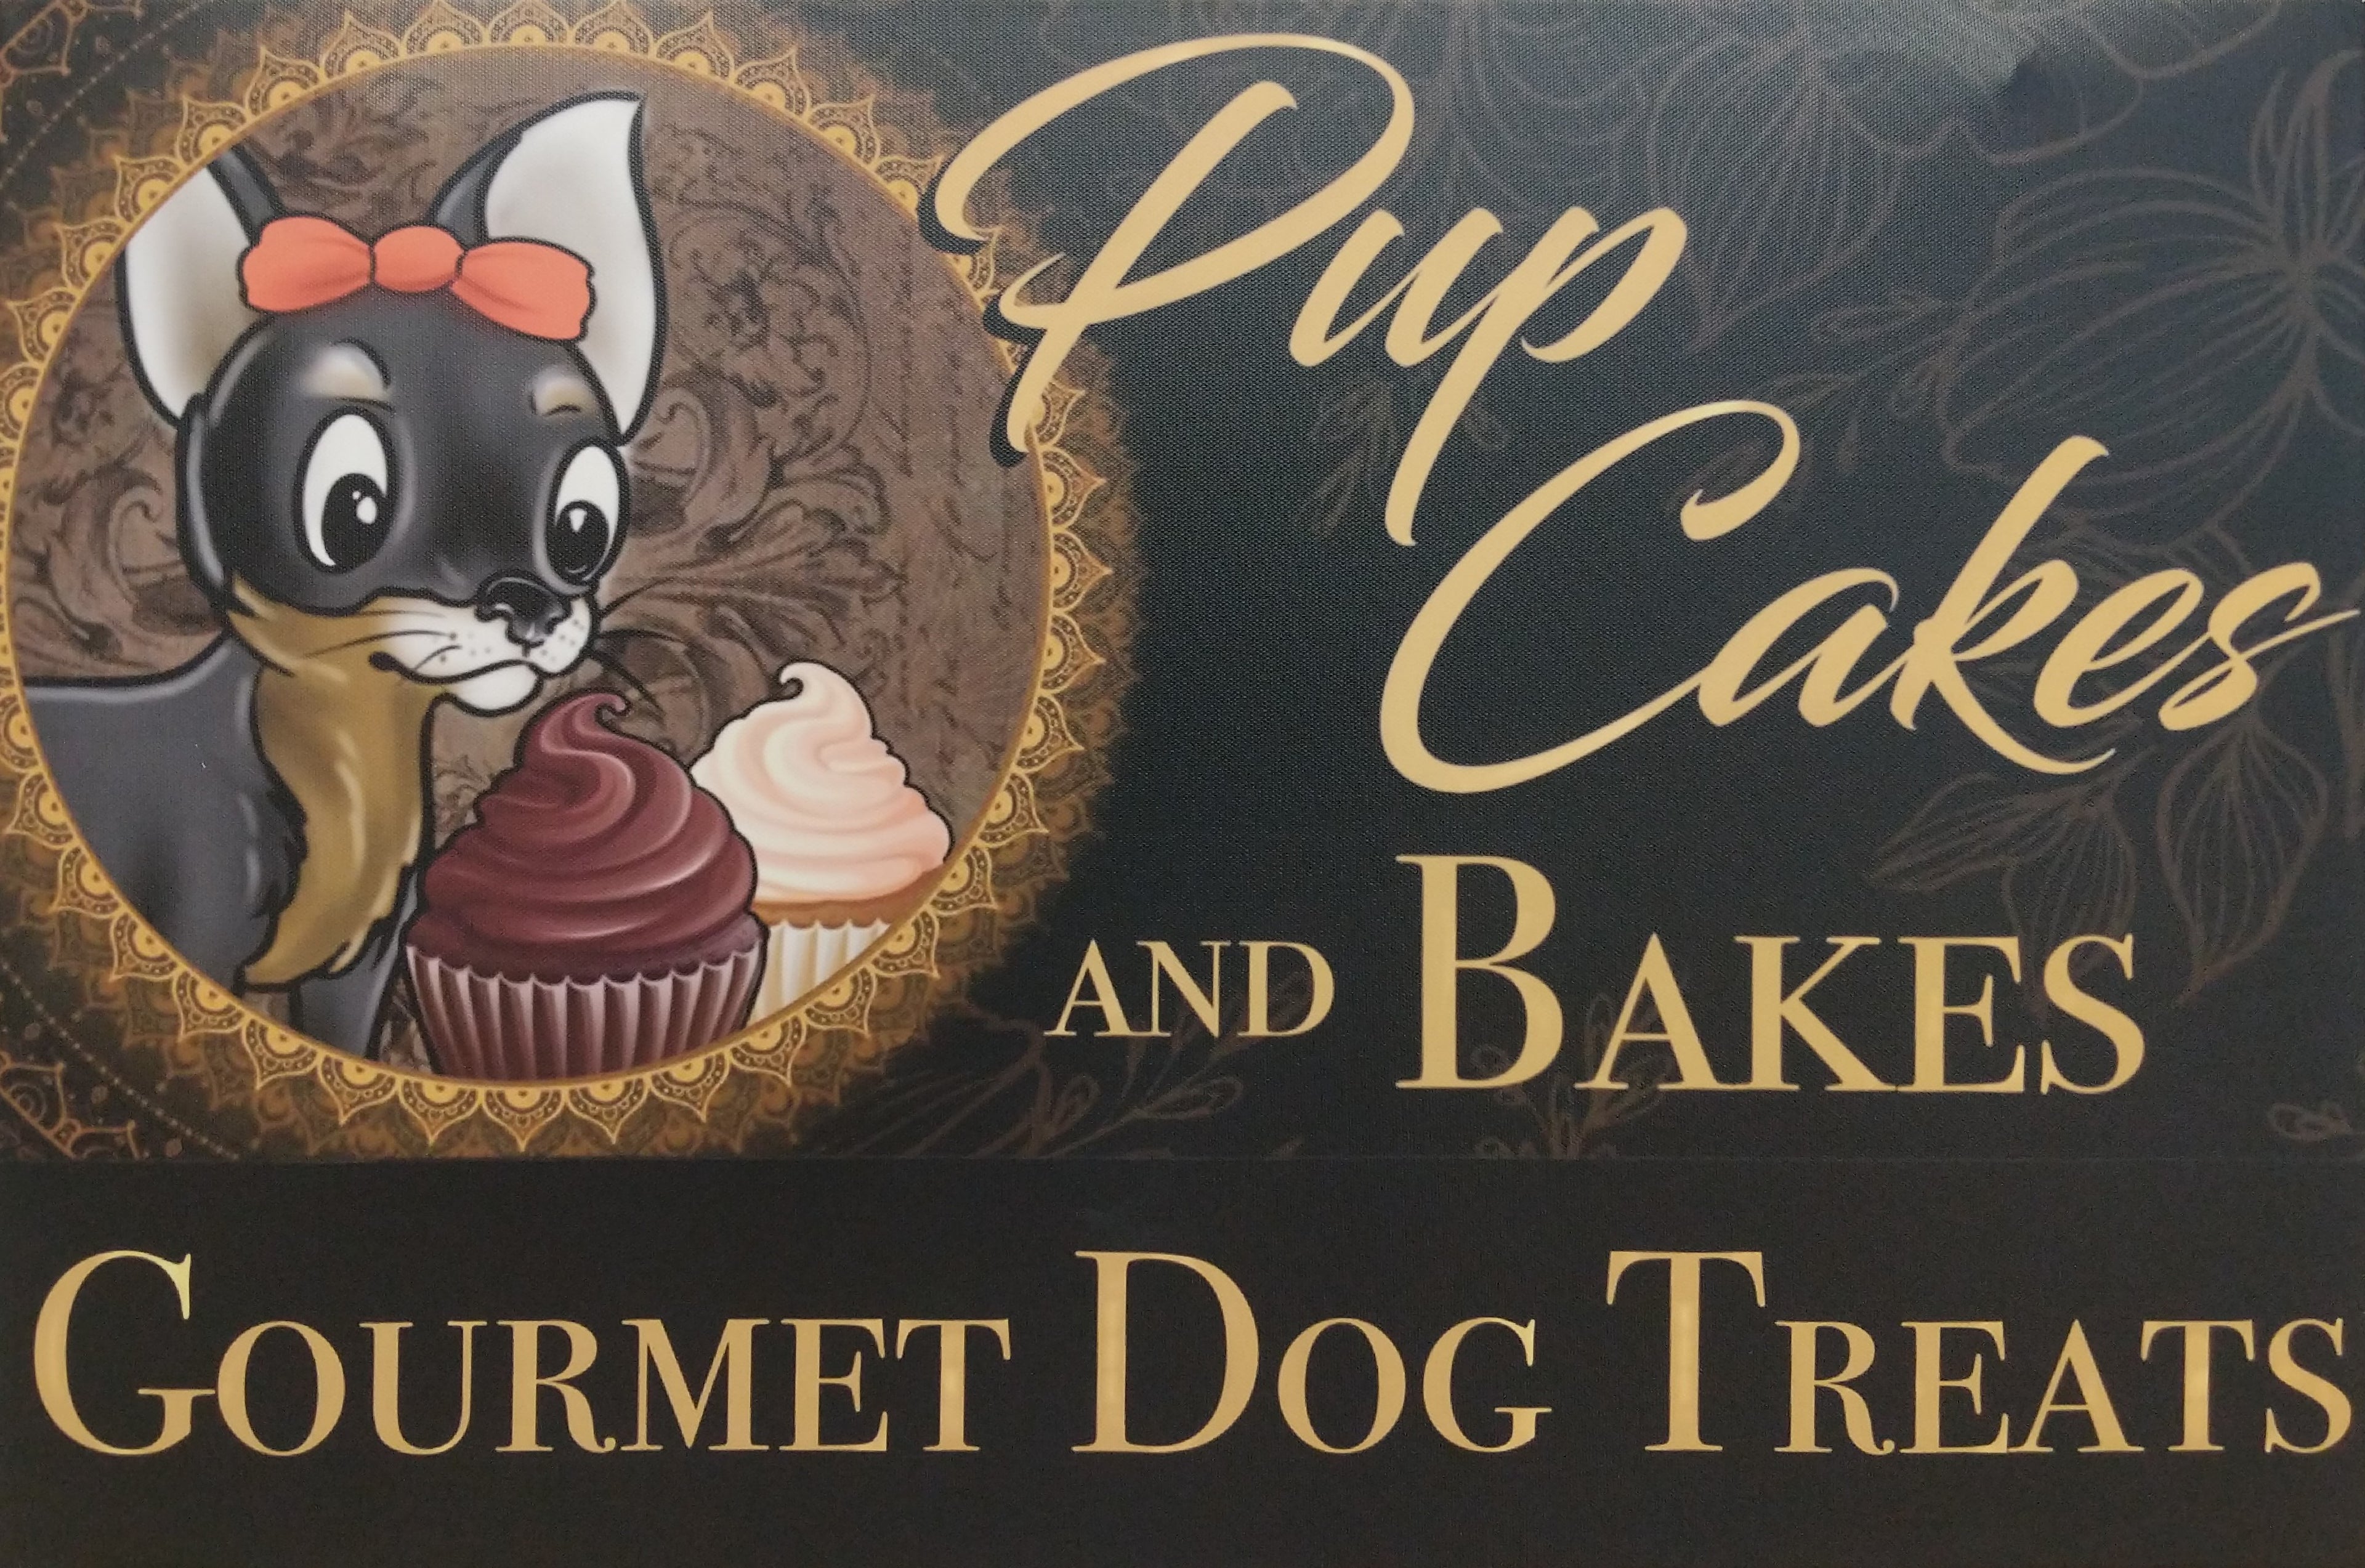 Pup Cakes & Bakes - Gourmet Dog Treats